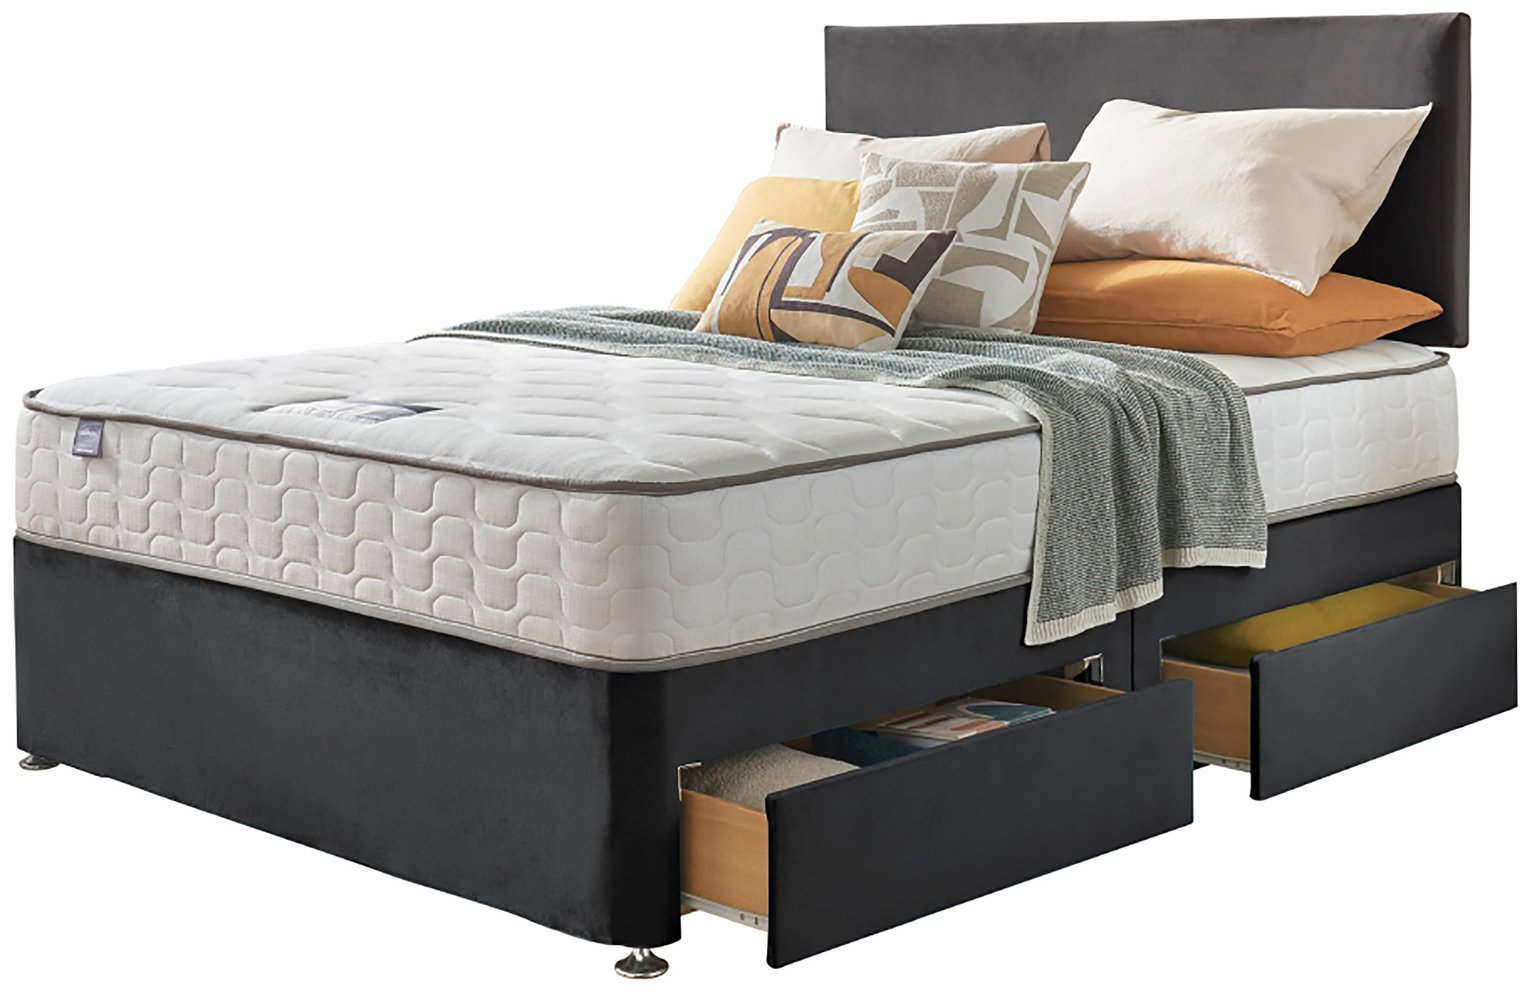 Silentnight Comfort Double 4 Drawer Divan Bed - Charcoal